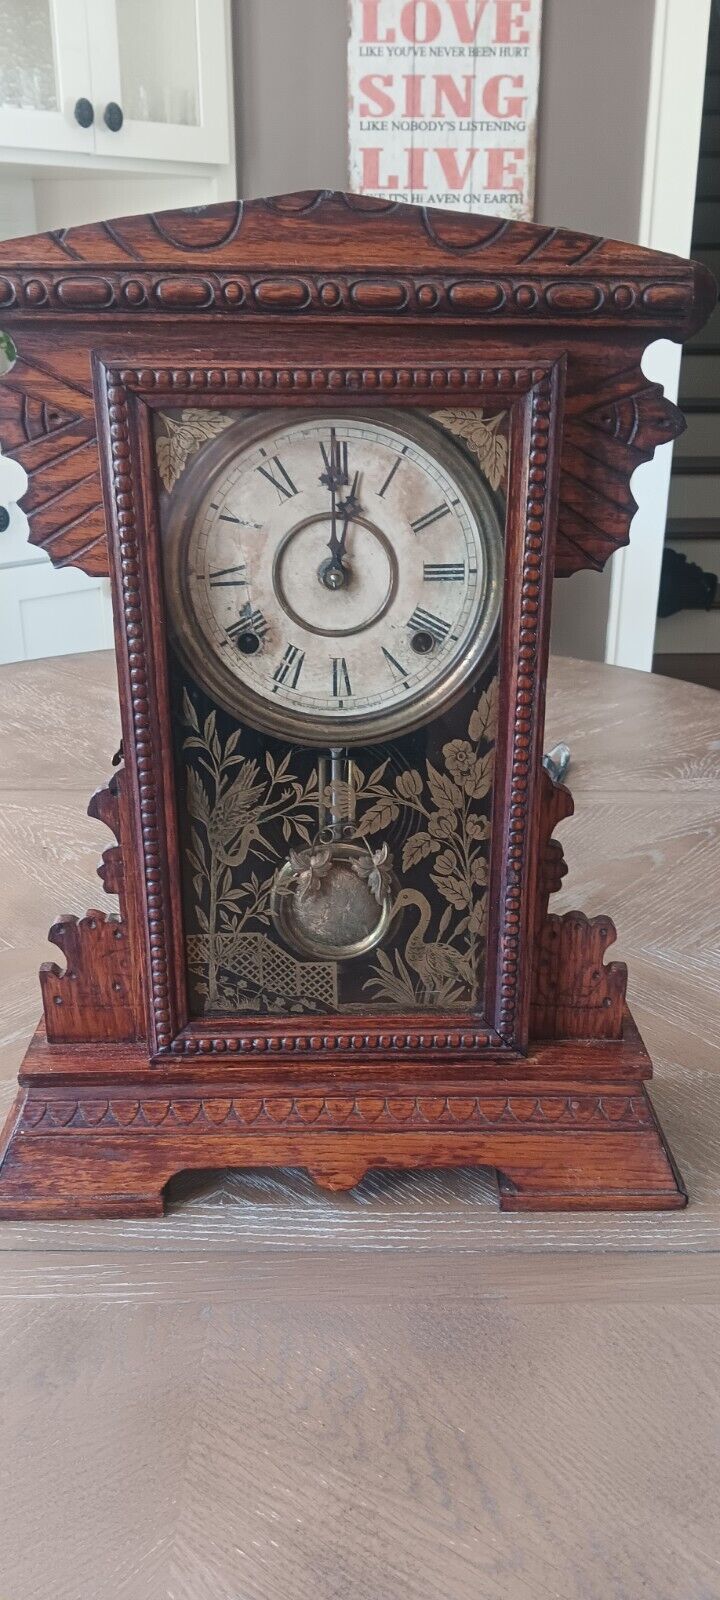 Rare Vintage Wm L Gilbert clock - Works